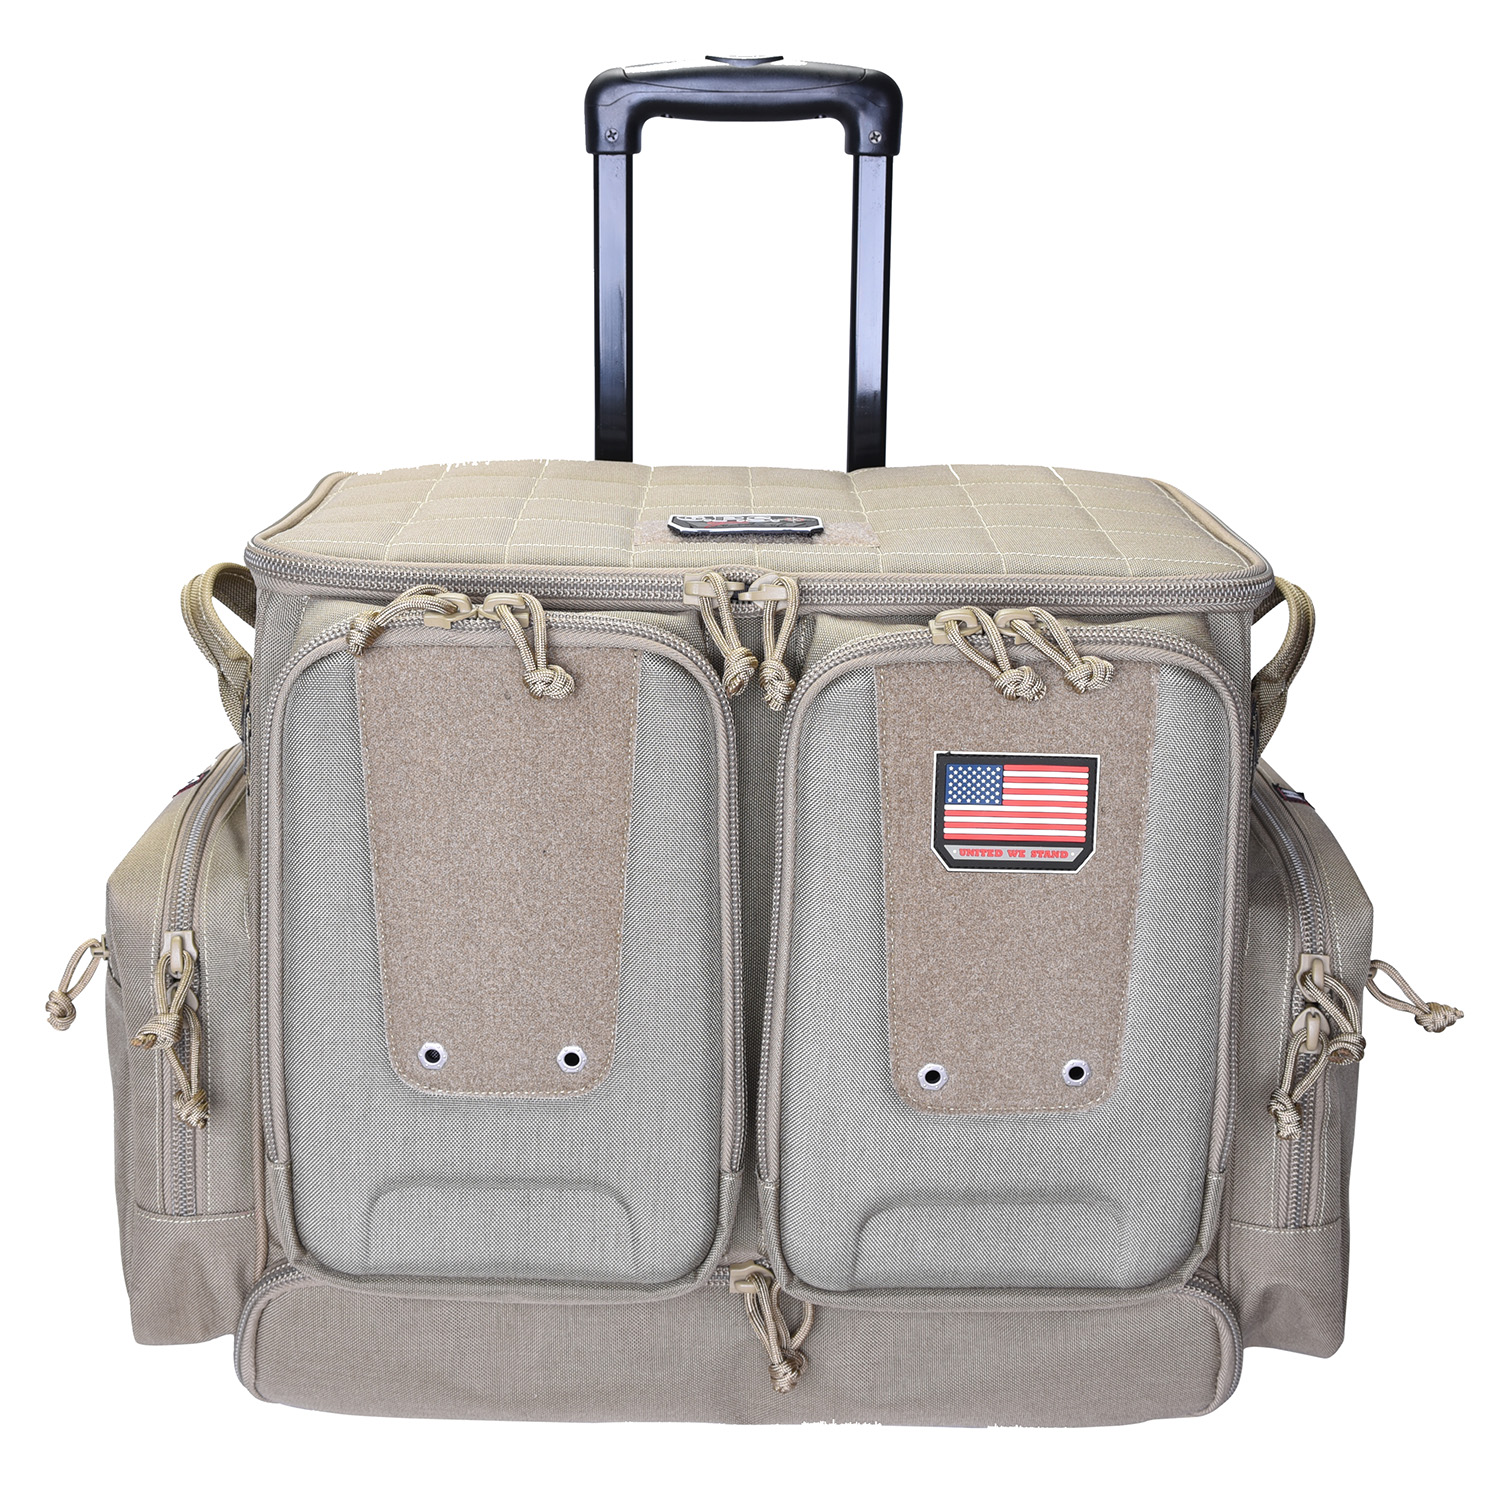 G*outdoors T2112robb Tactical Range Bag Rolling 1000d Nylon Teflon Coating Black for sale online 